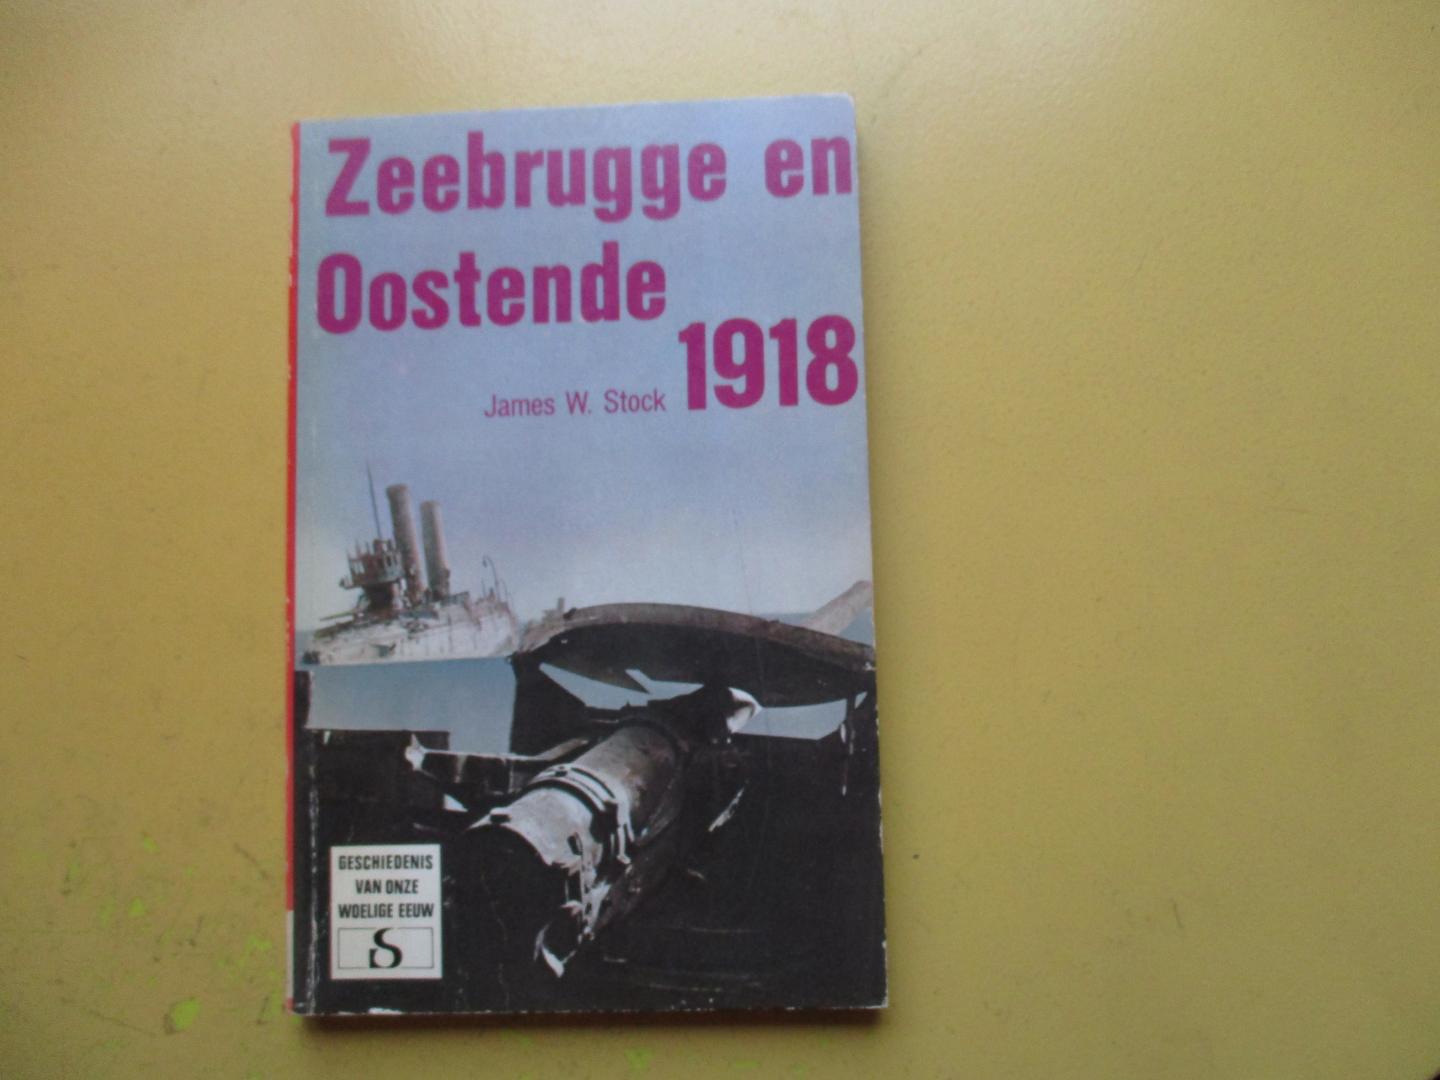 Stock, James W. - Zeebrugge en oostende 1918 / druk 1